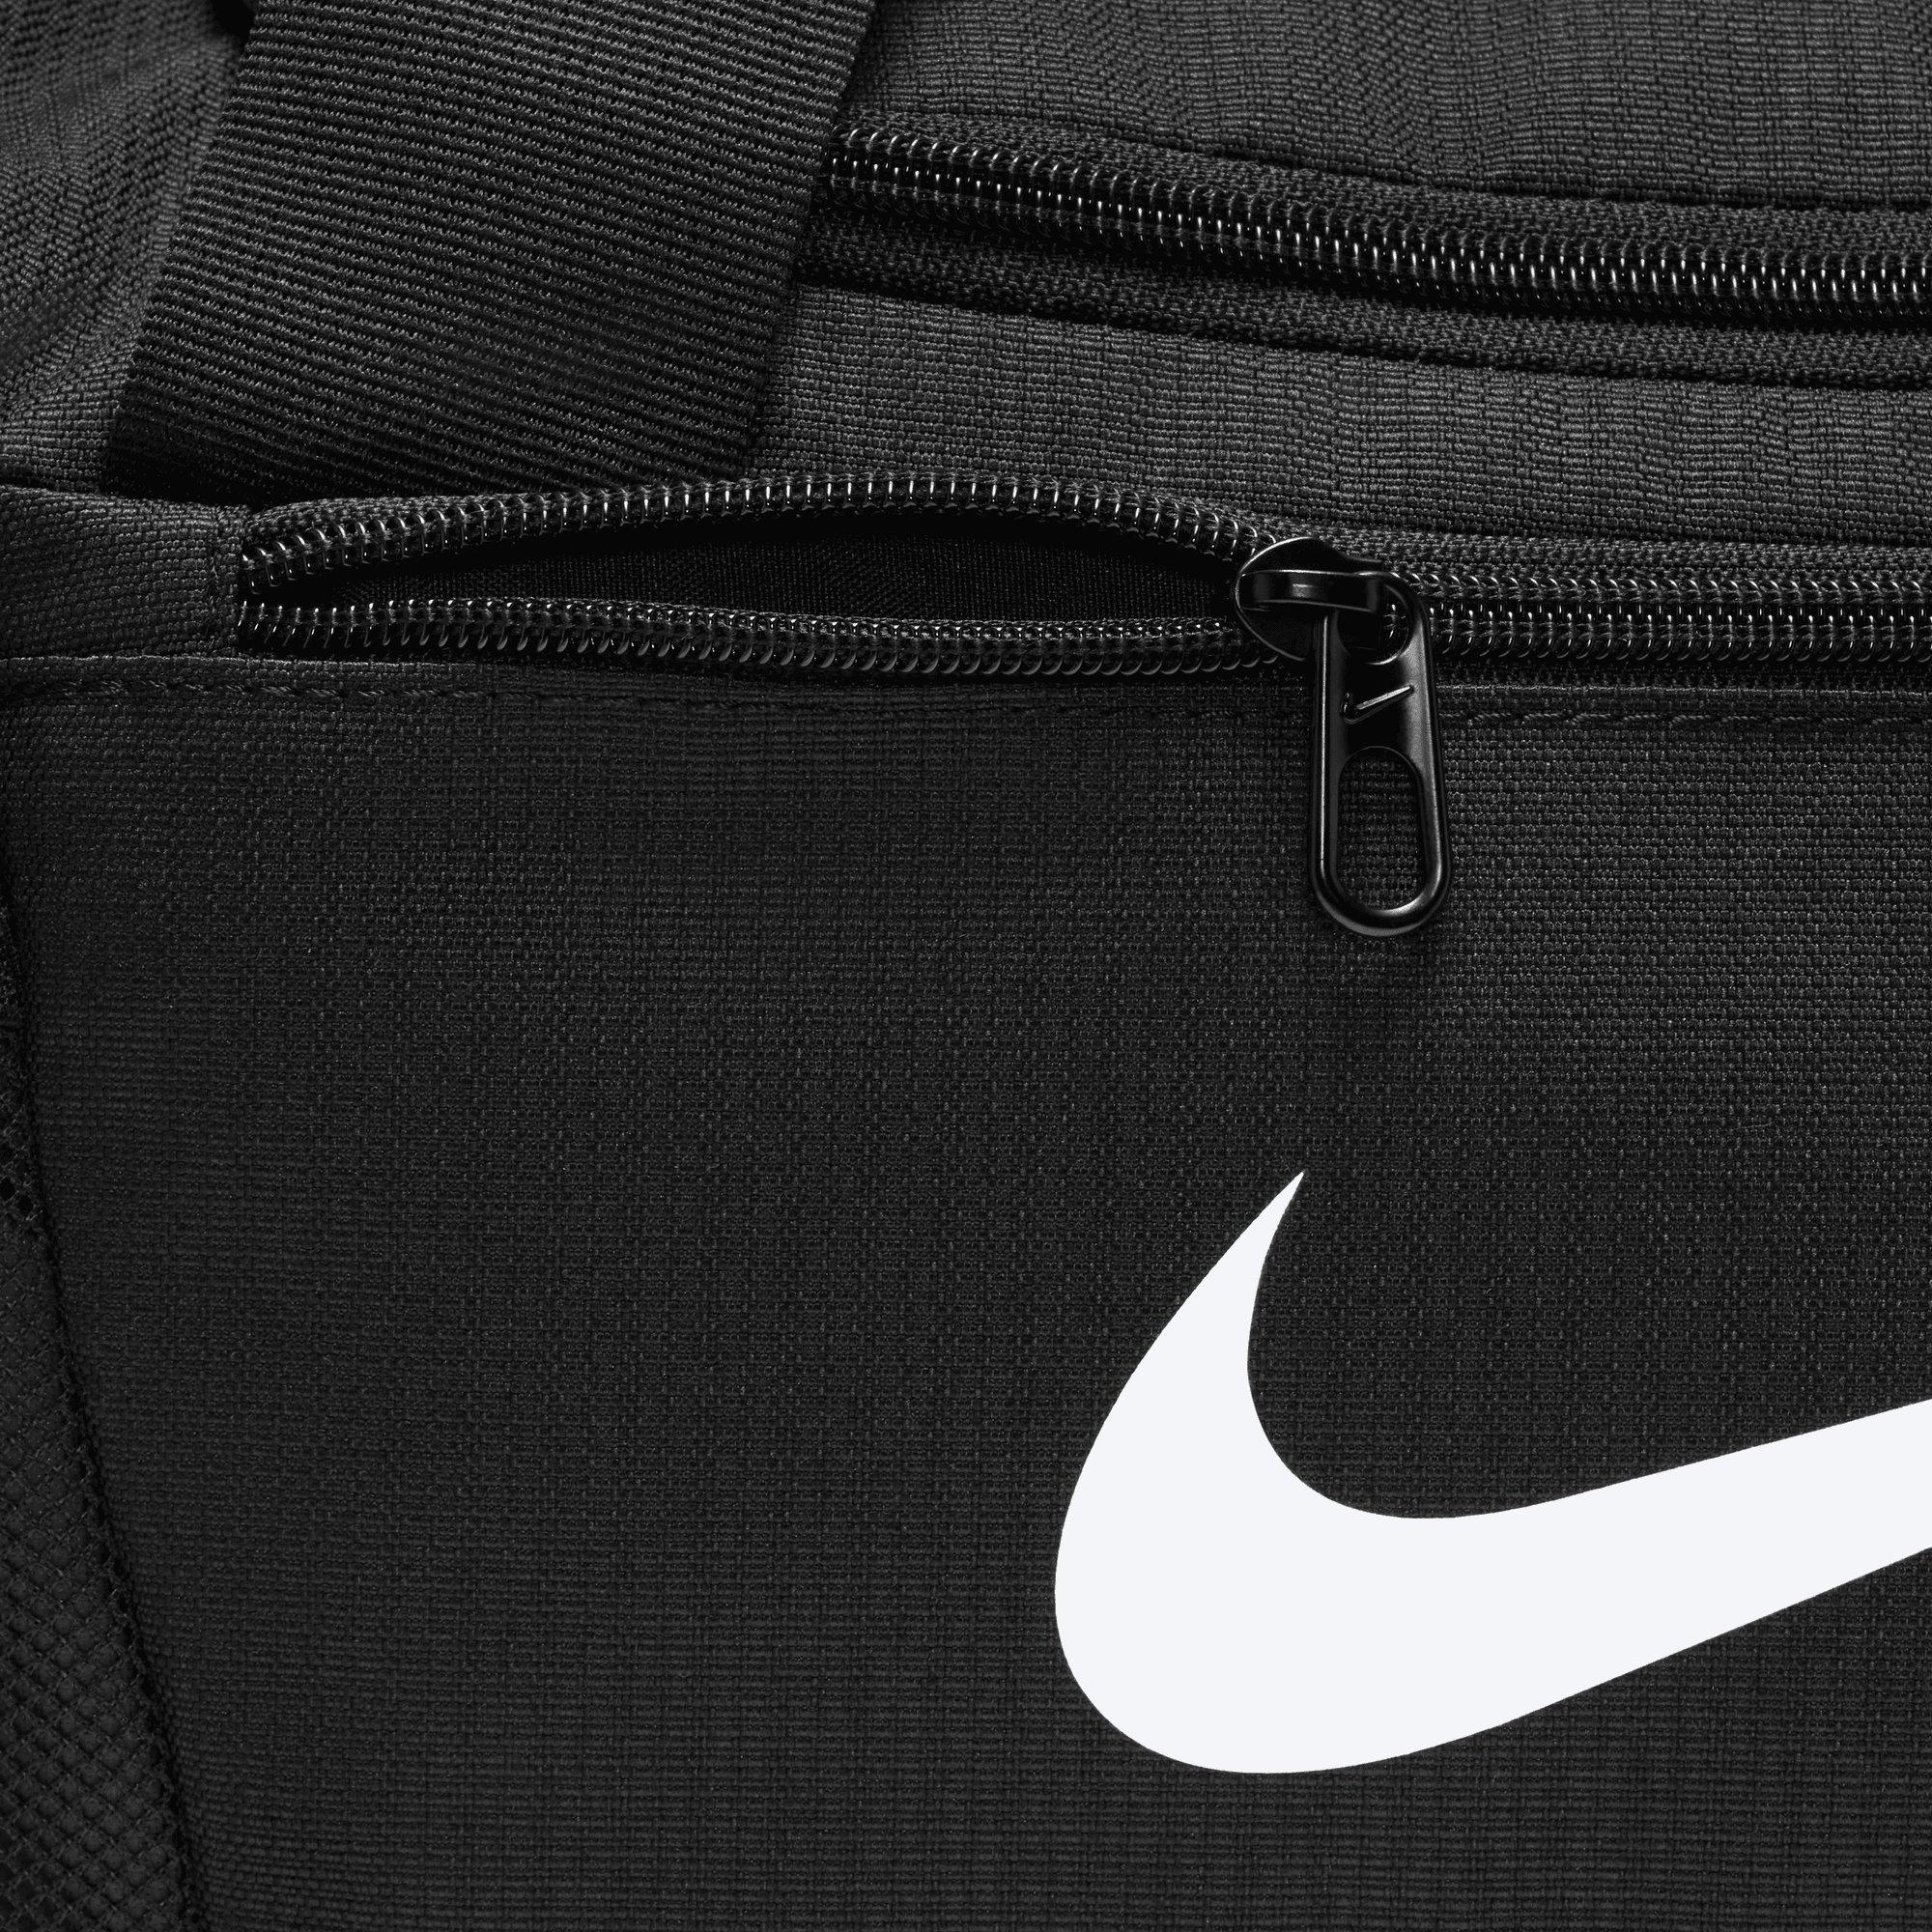 Nike Brasilia 9.5 Training Duffel Bag XS 25L